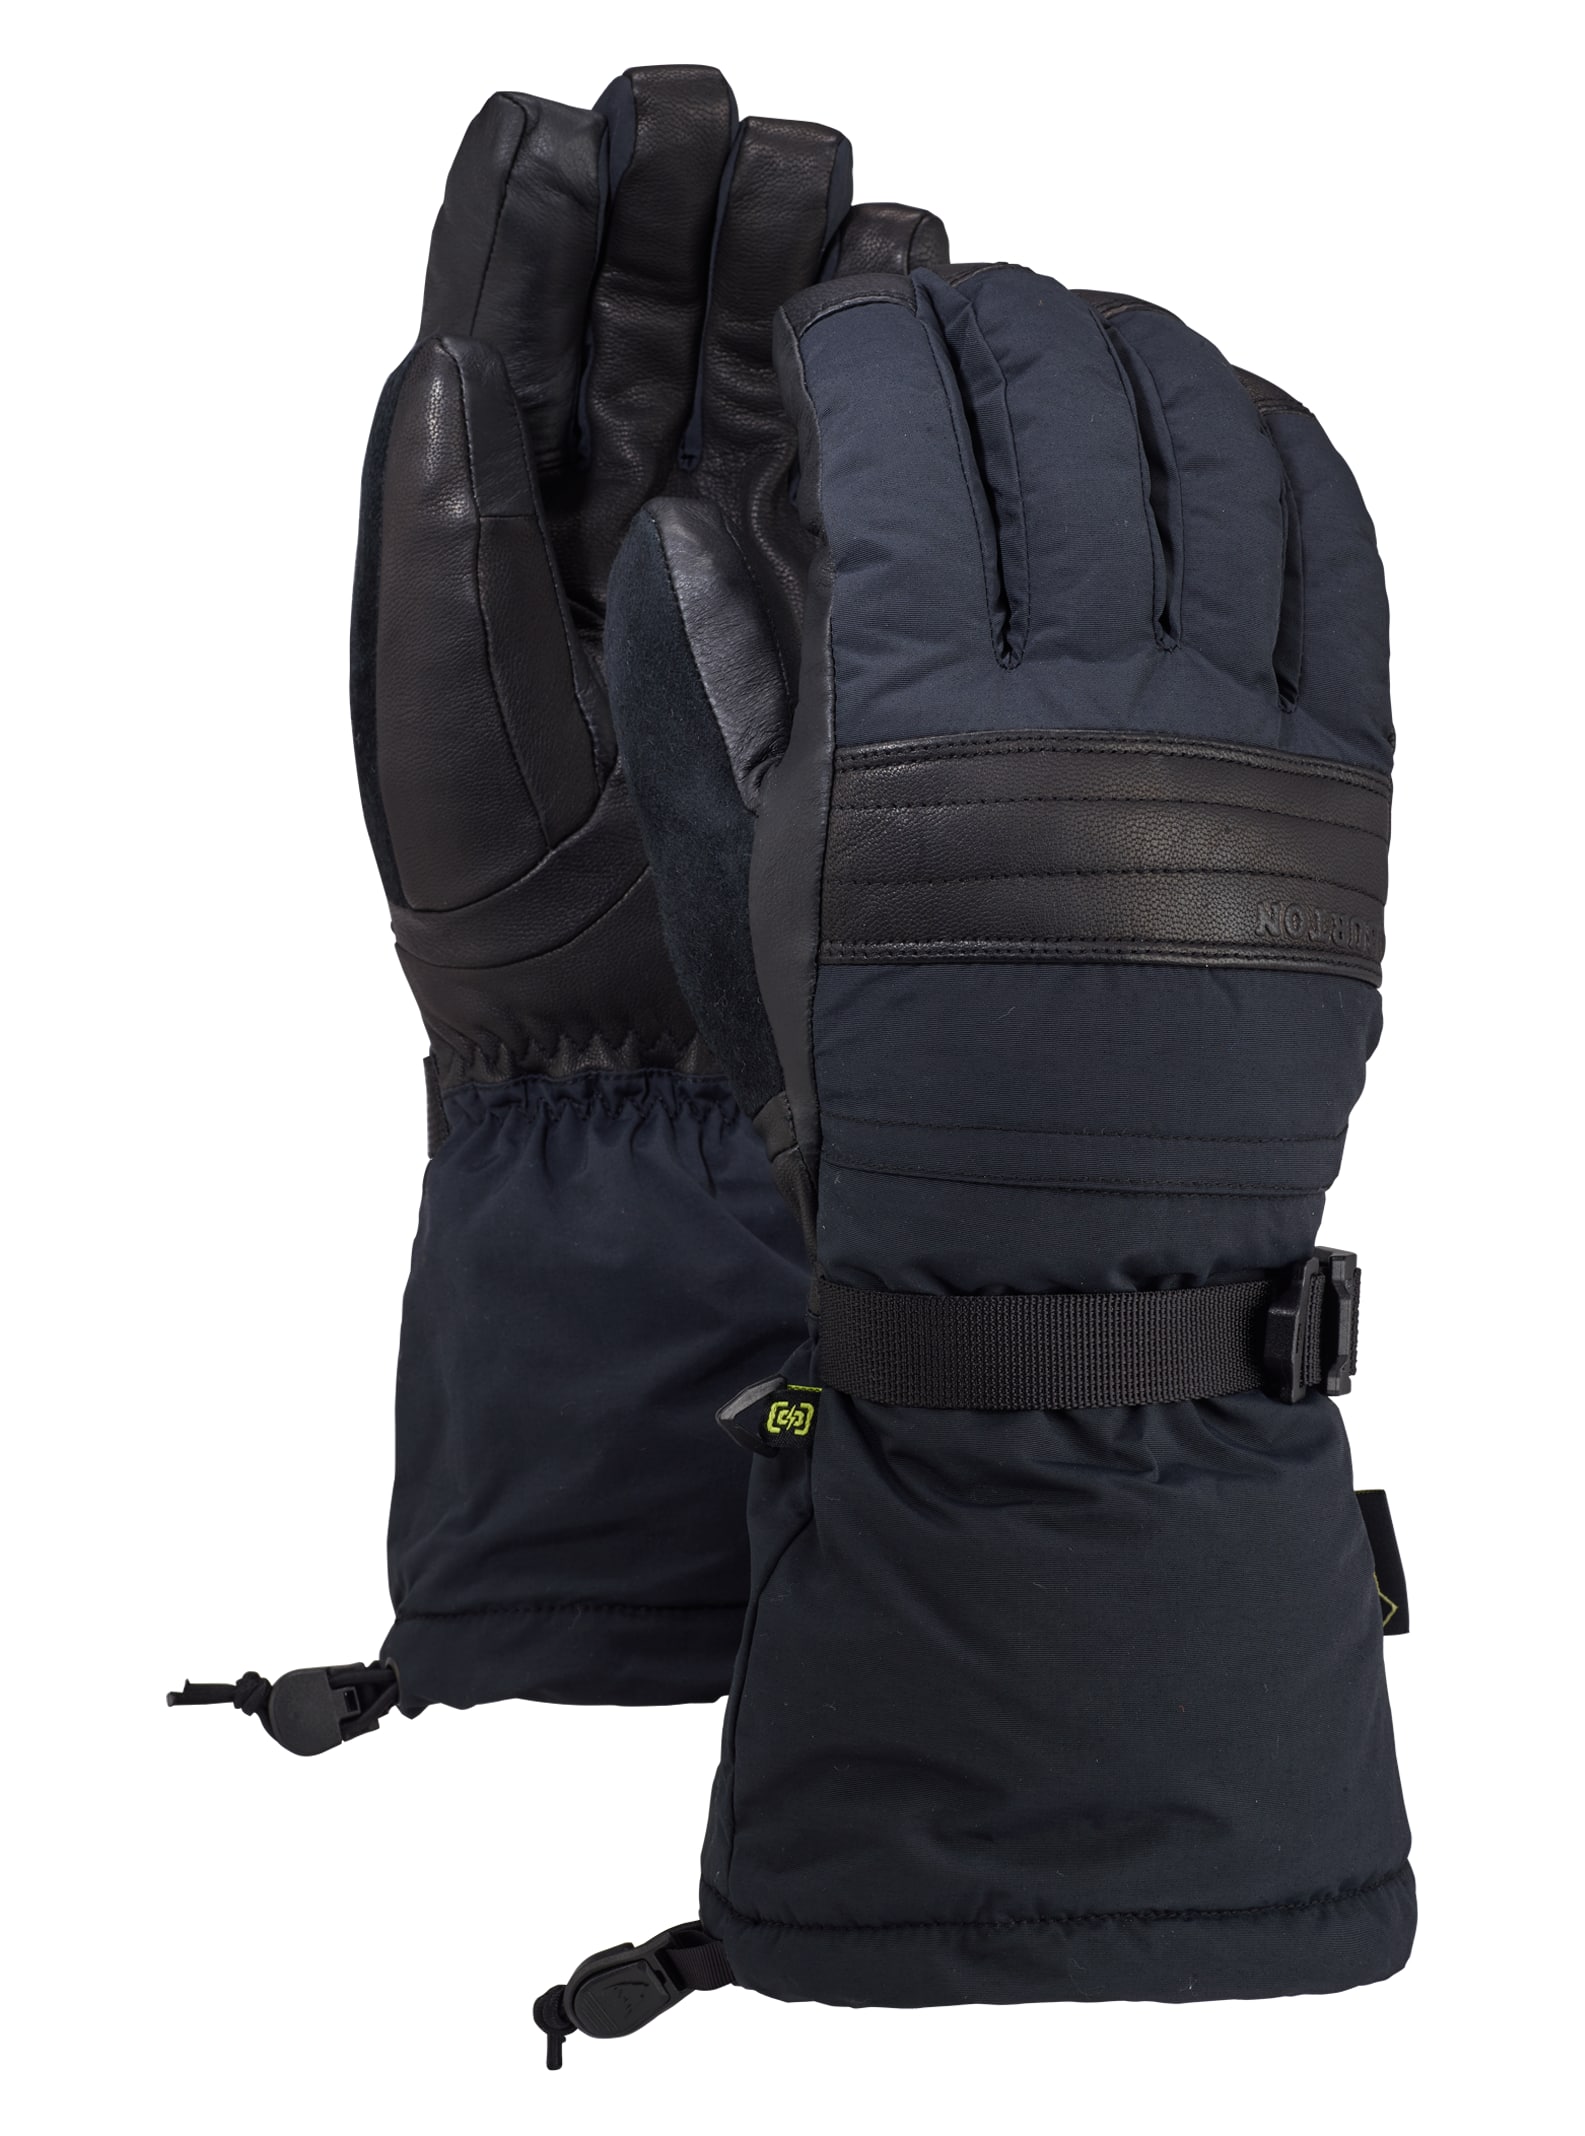 Men's Burton GORE-TEX Warmest Glove | Burton.com Winter 2022 CA